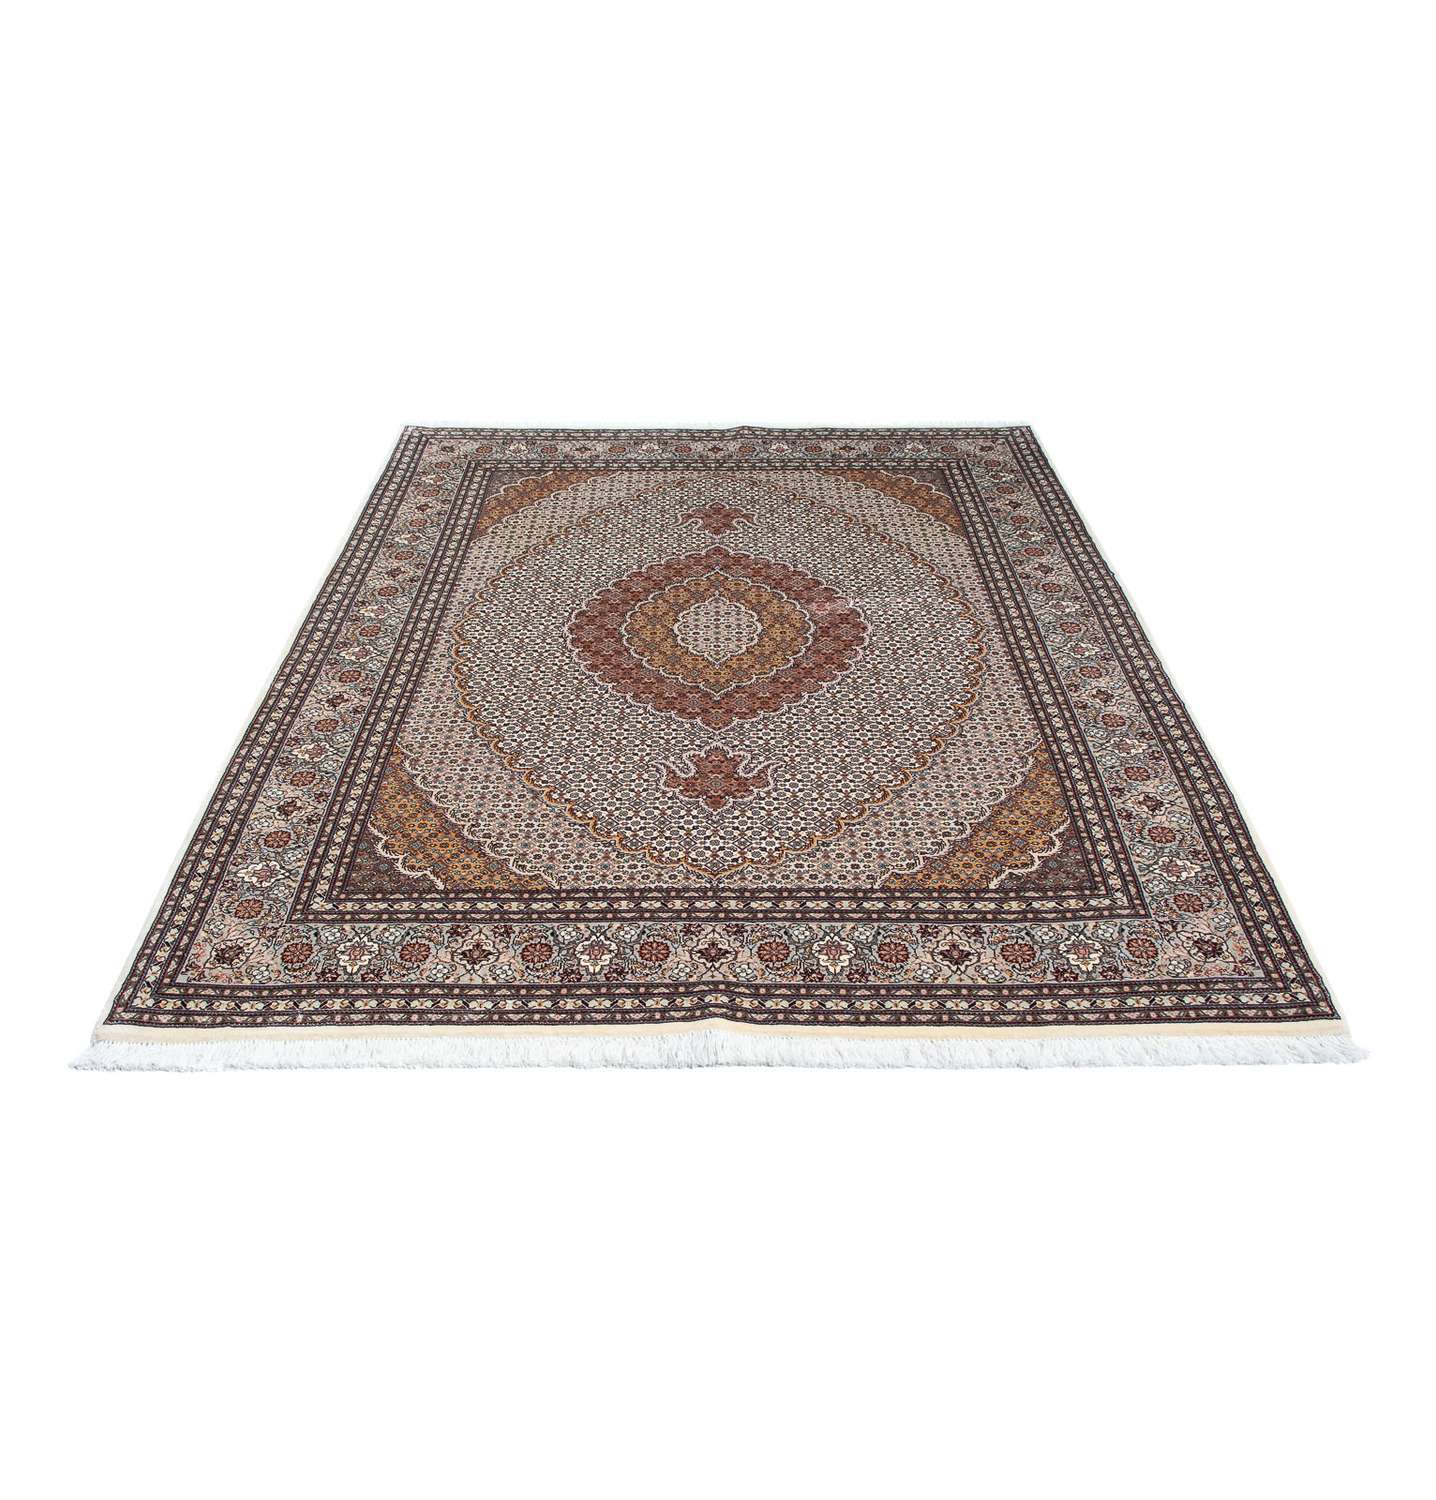 Perský koberec - Tabríz - 202 x 151 cm - béžová